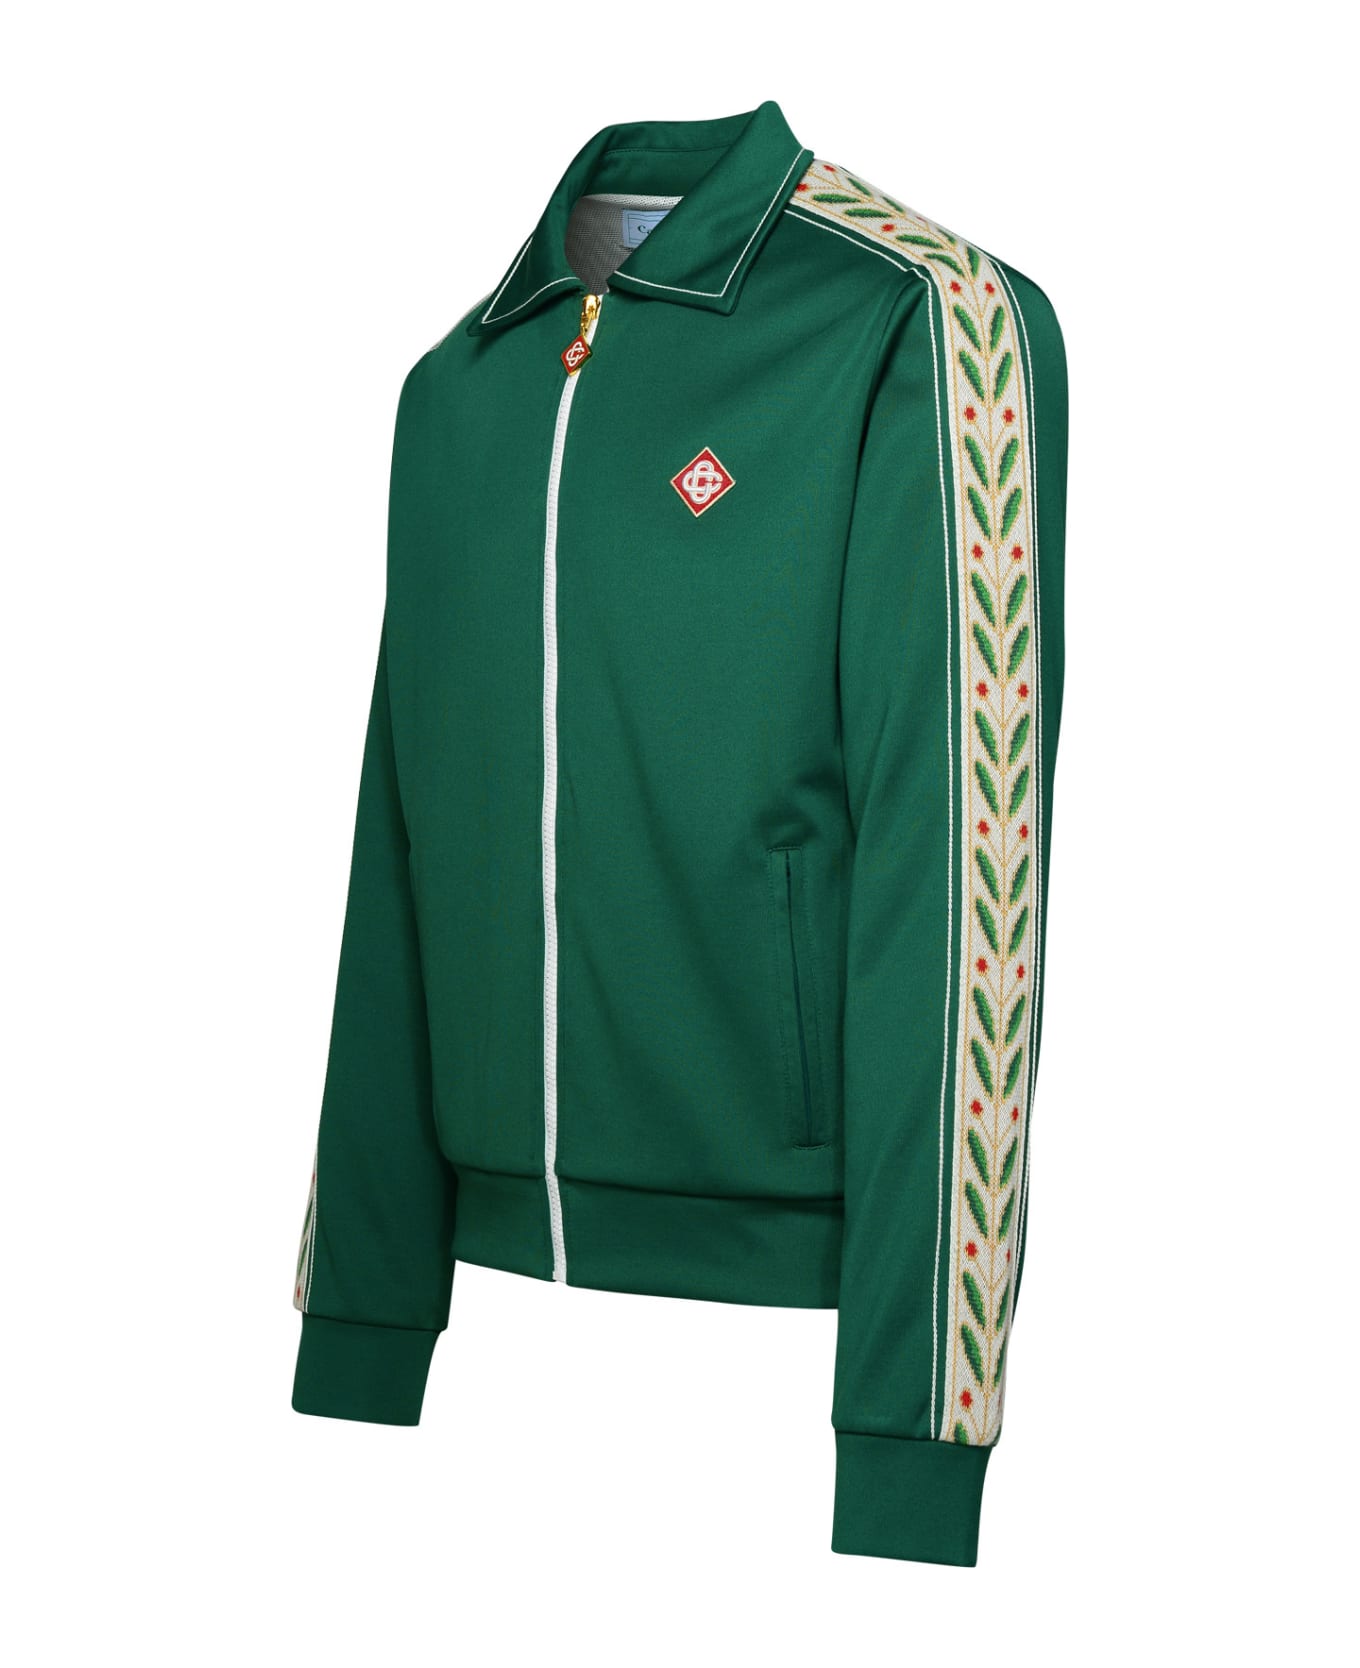 Casablanca 'laurel' Green Cotton Blend Sweatshirt - Green ニットウェア